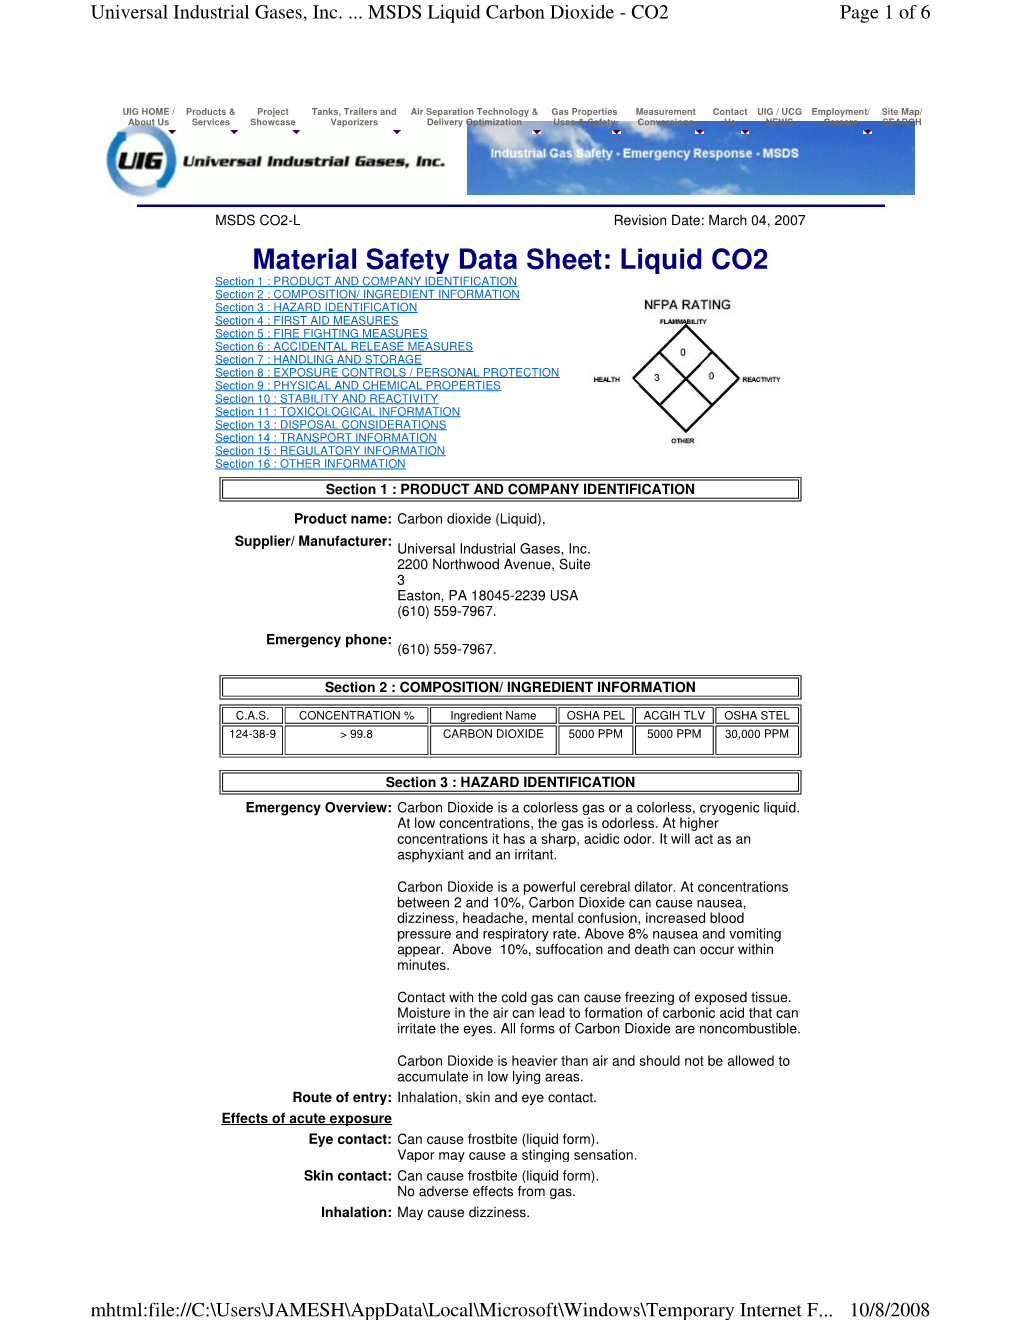 Material Safety Data Sheet: Liquid